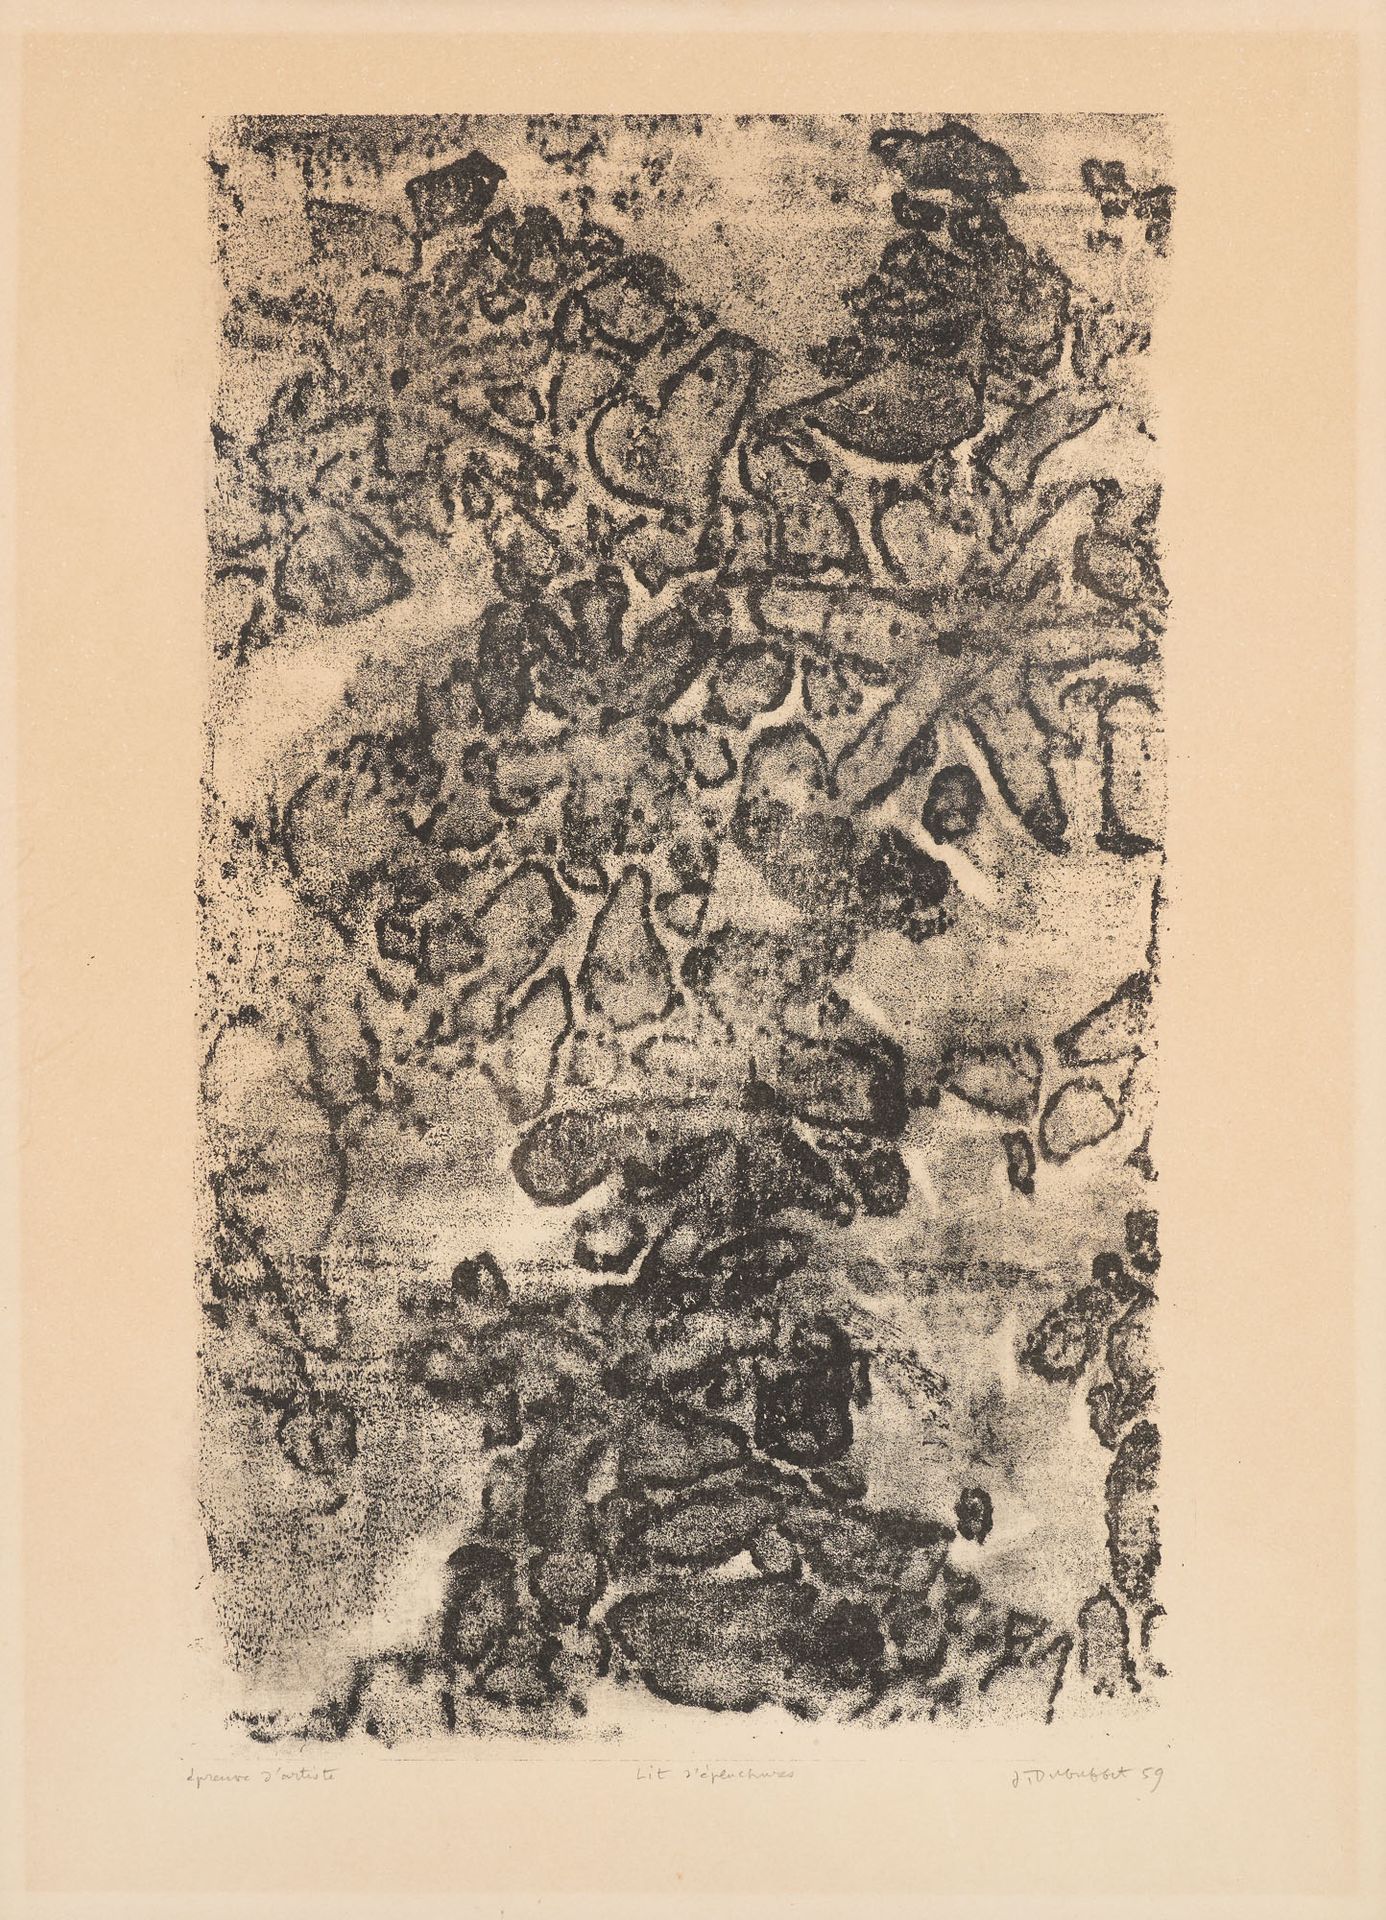 Jean DUBUFFET École française (1901-1985) Stampa, litografia: "Letto di bucce".
&hellip;